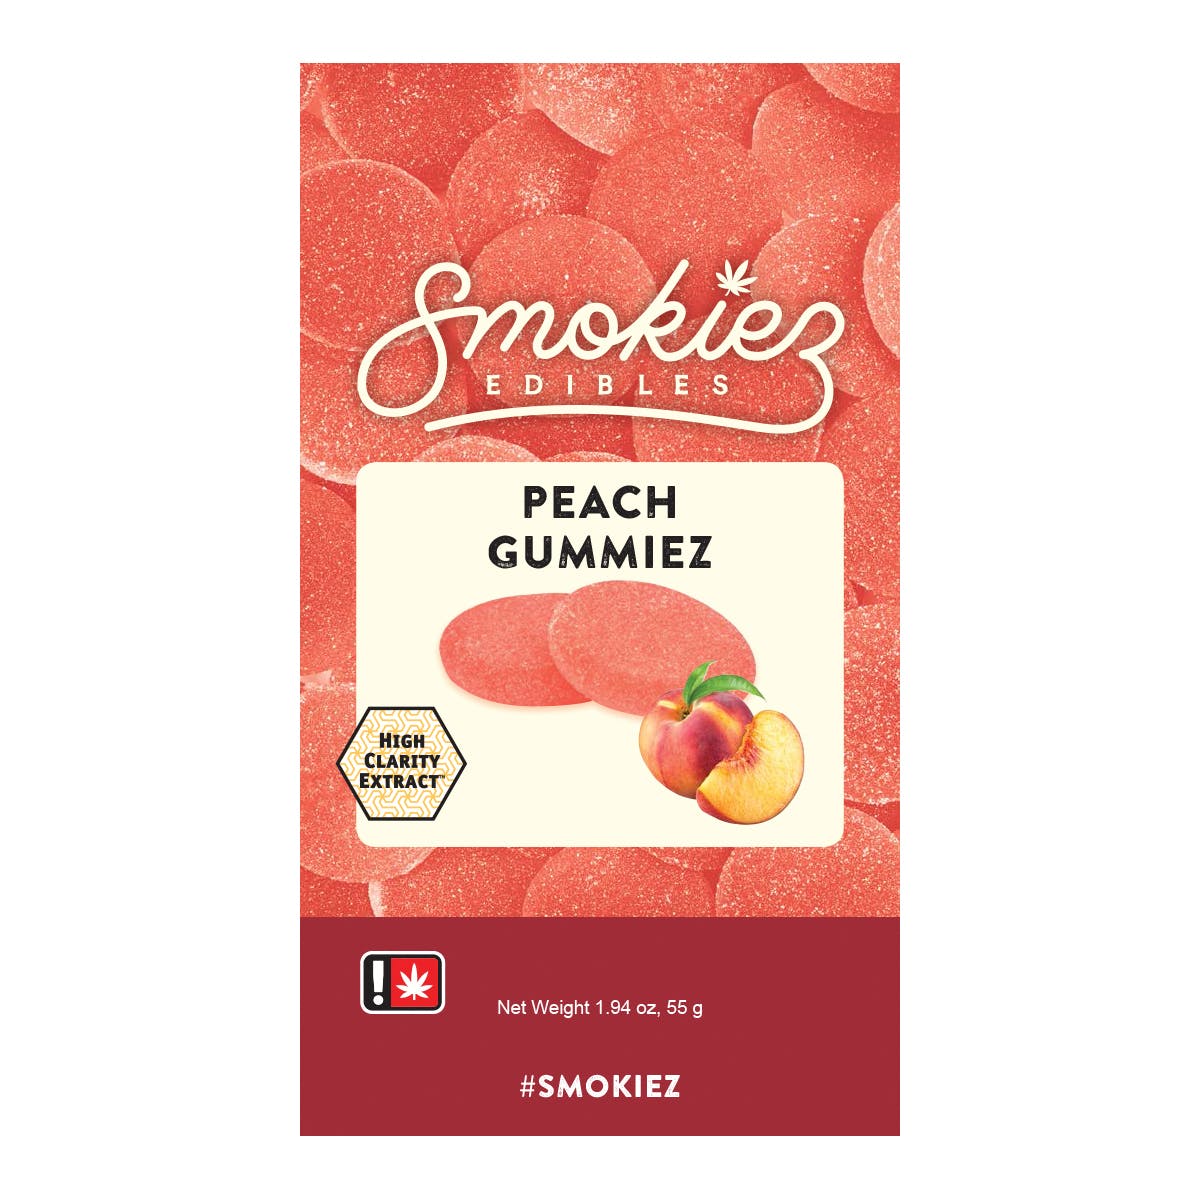 edible-smokiez-edibles-peach-gummiez-2c-50-mg